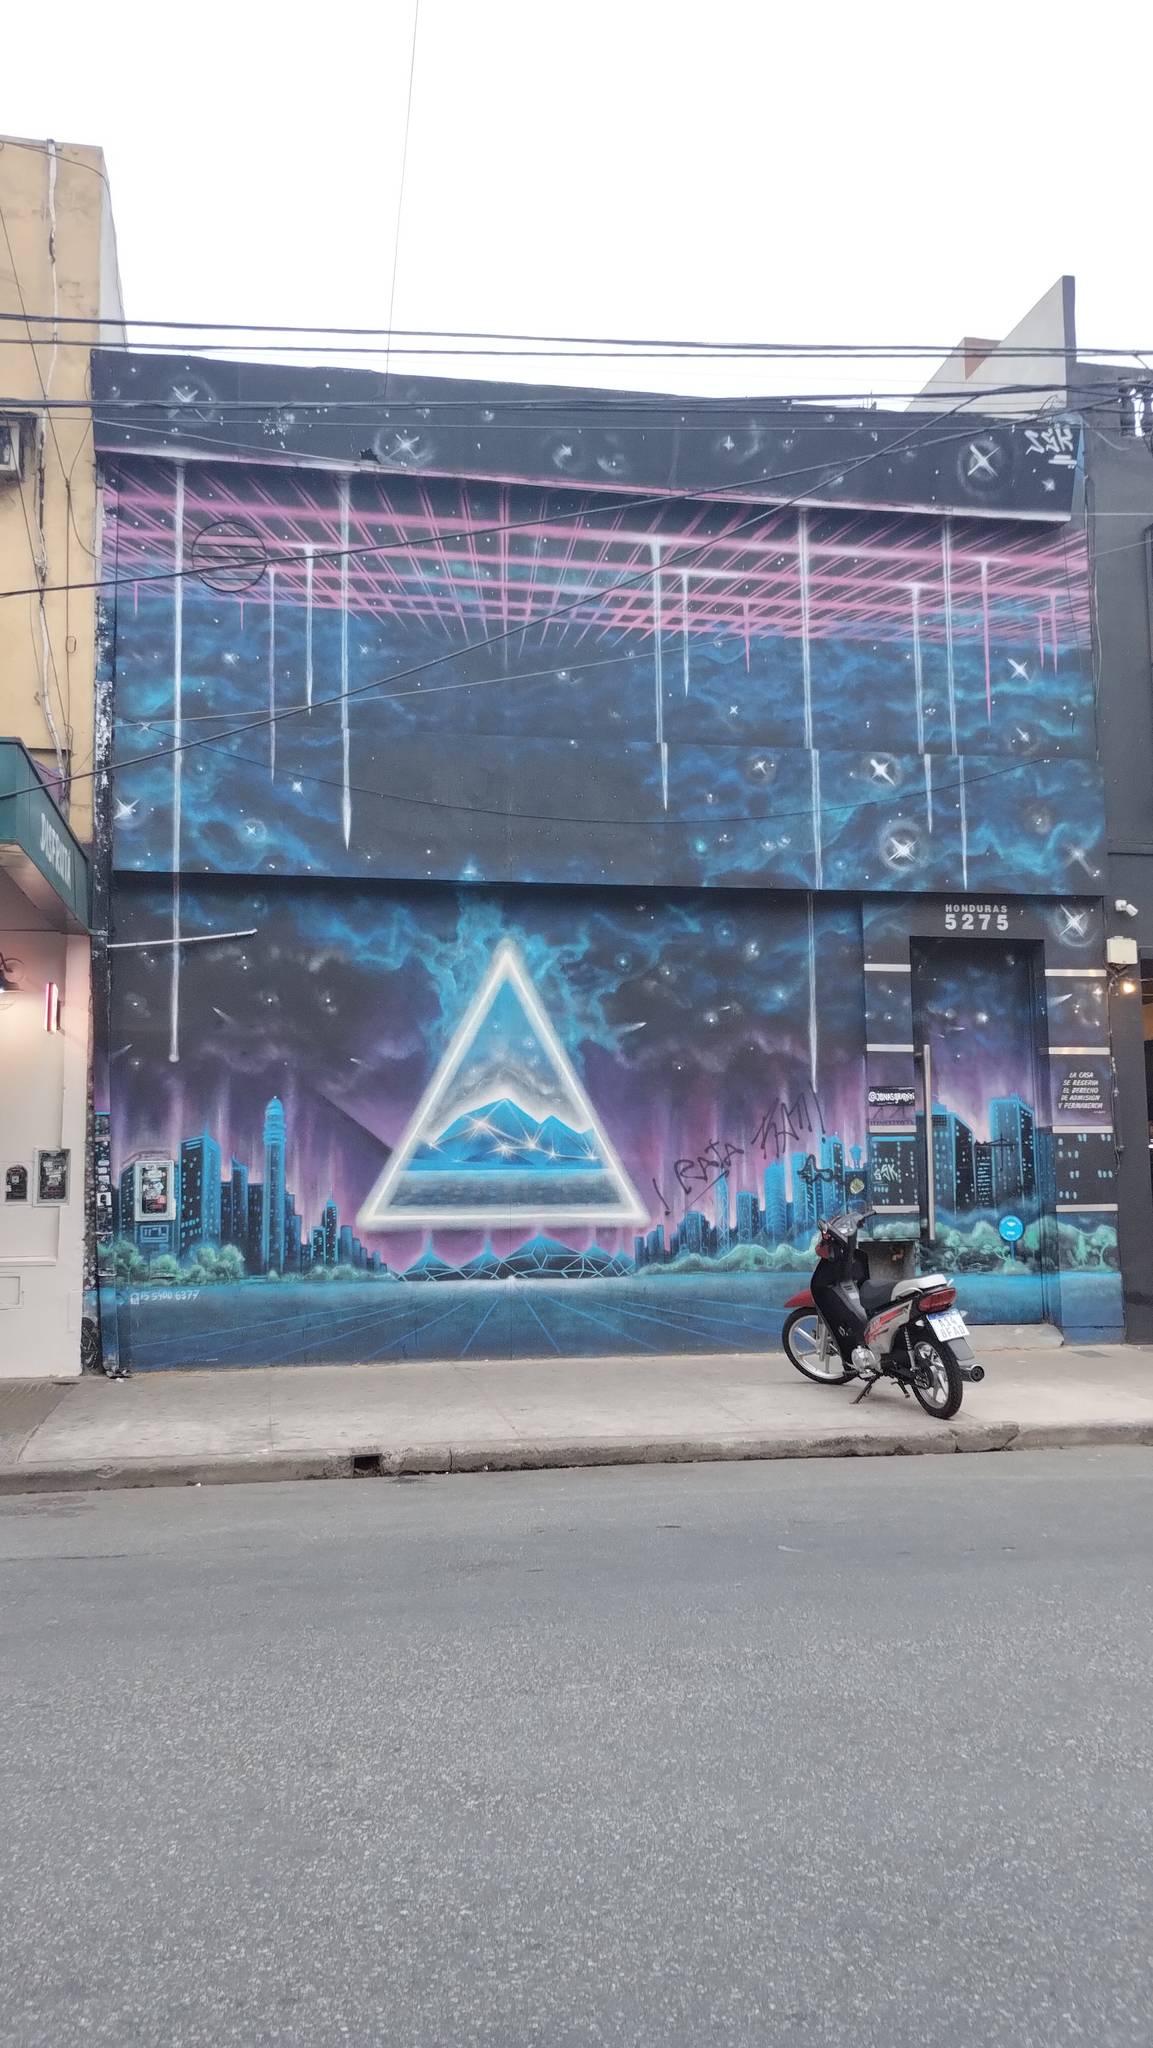 jonas graffiti &mdash;Pirámide 